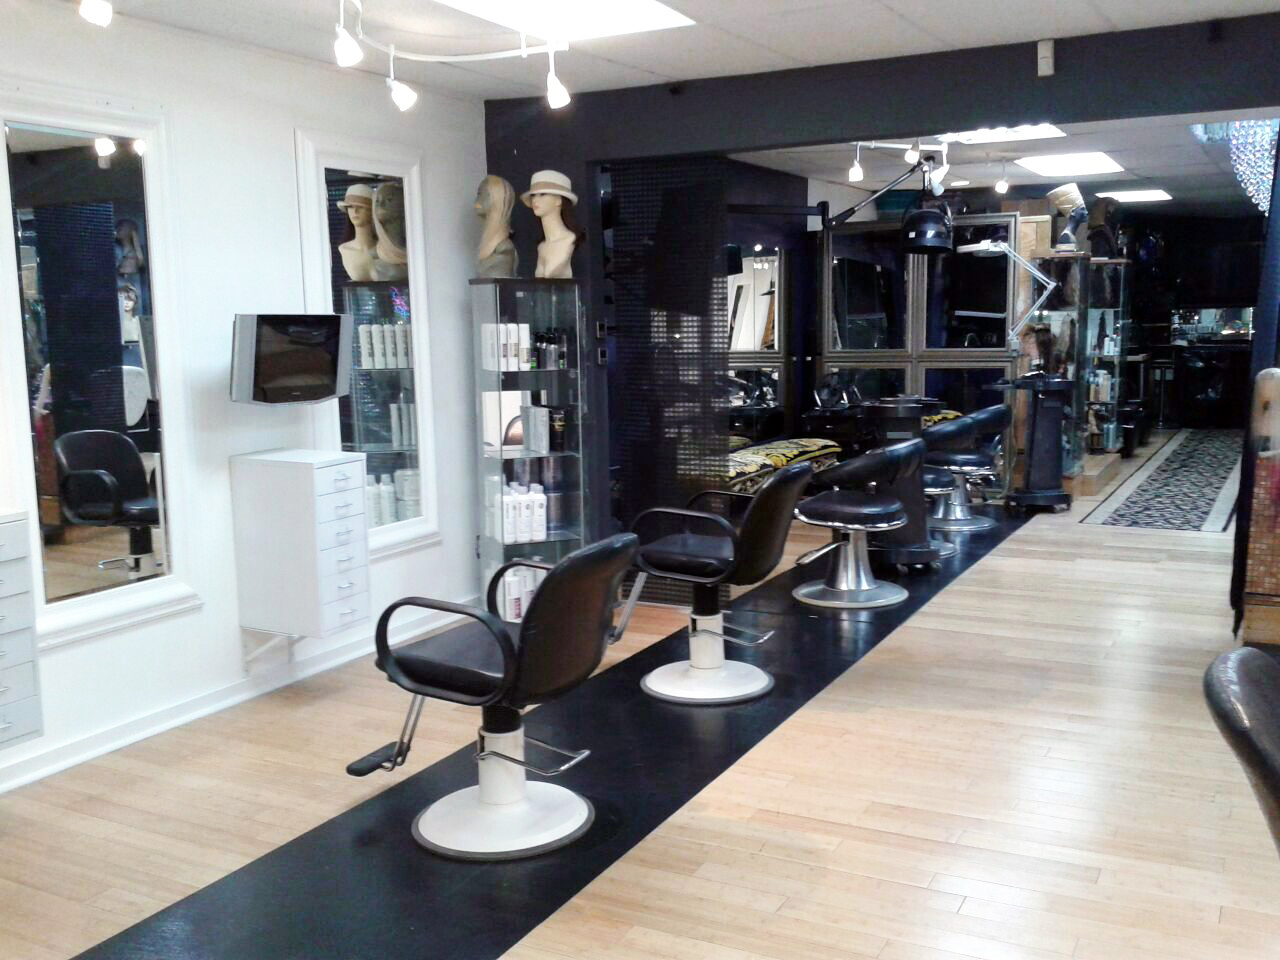 Photo of SVETNADIA Salon NY in Mineola City, New York, United States - 1 Picture of Point of interest, Establishment, Health, Beauty salon, Hair care